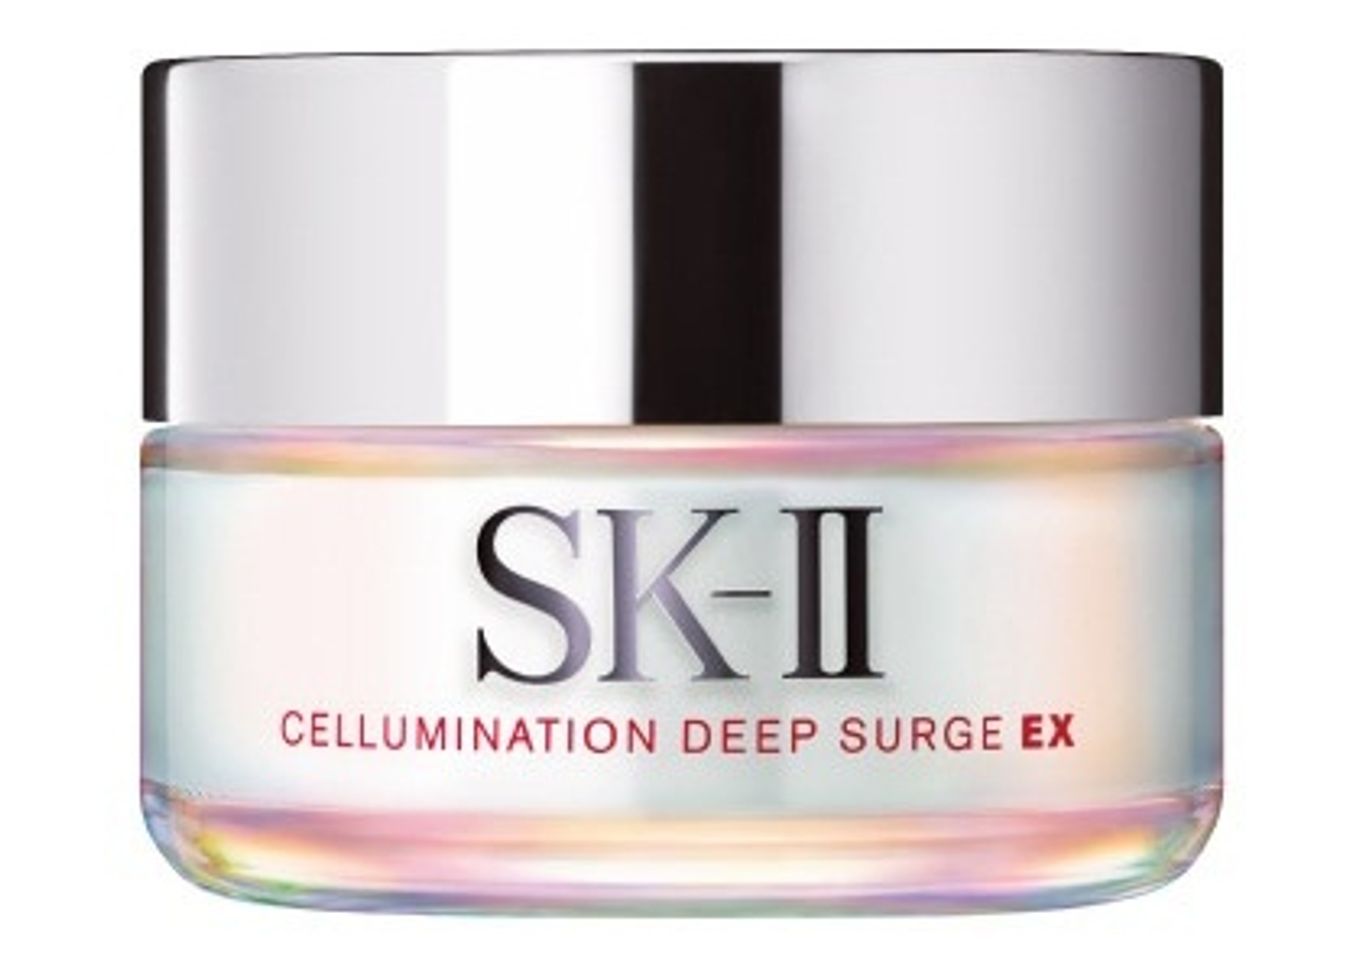 Kem dưỡng trắng da SK-II Cellumination Deep Surge EX 2